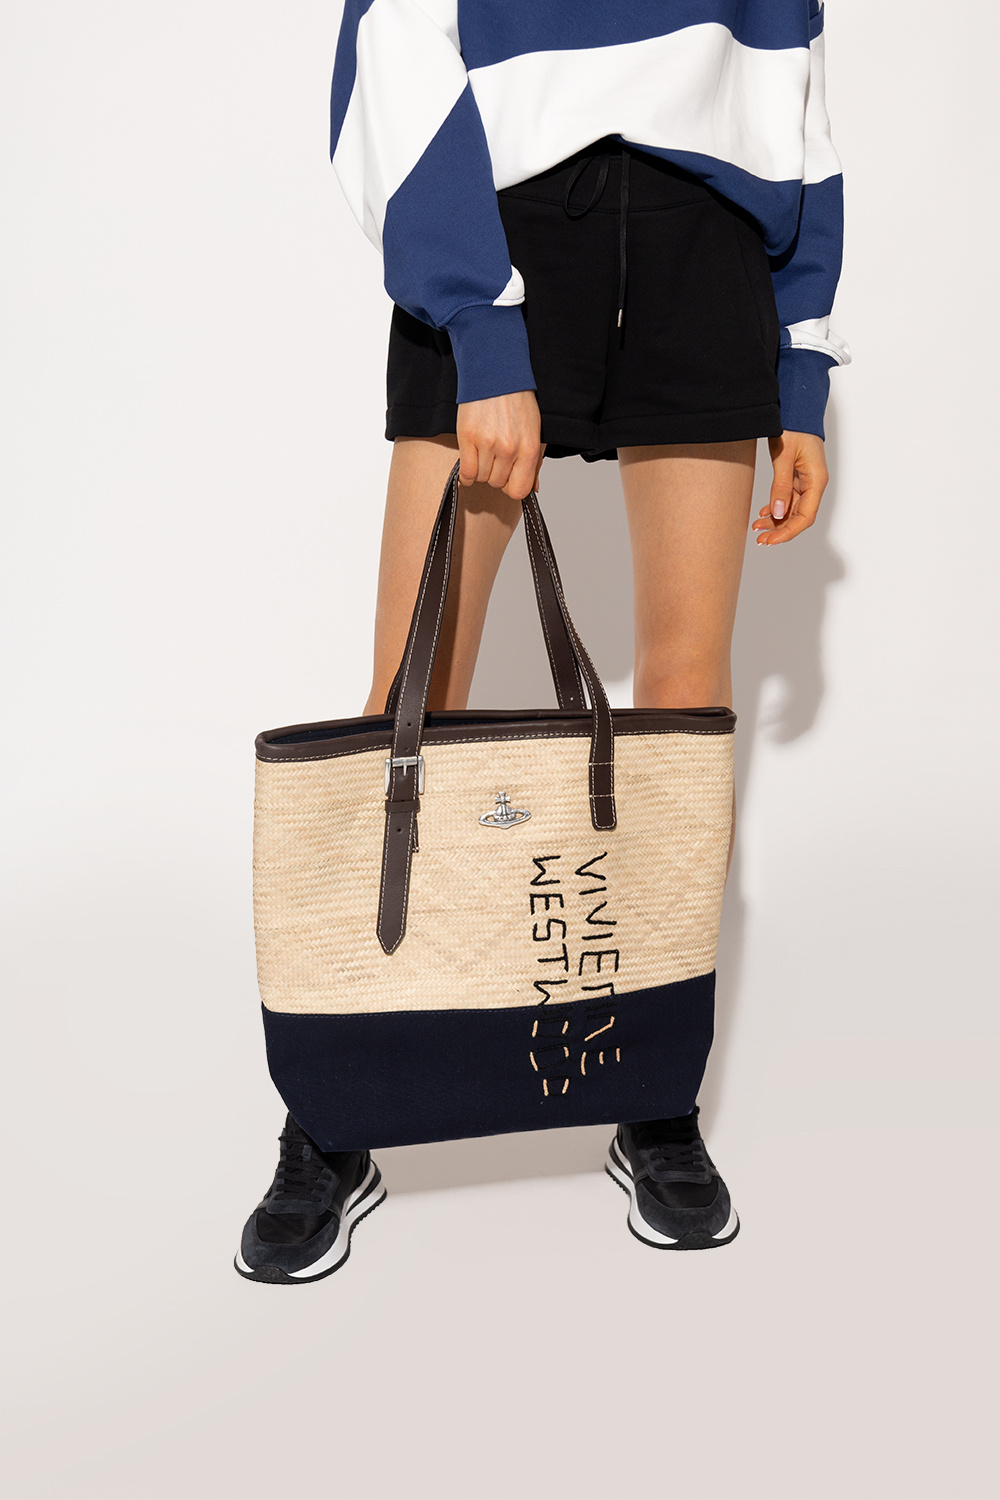 Vivienne Westwood The ‘Made in Kenya’ collection shopper bag